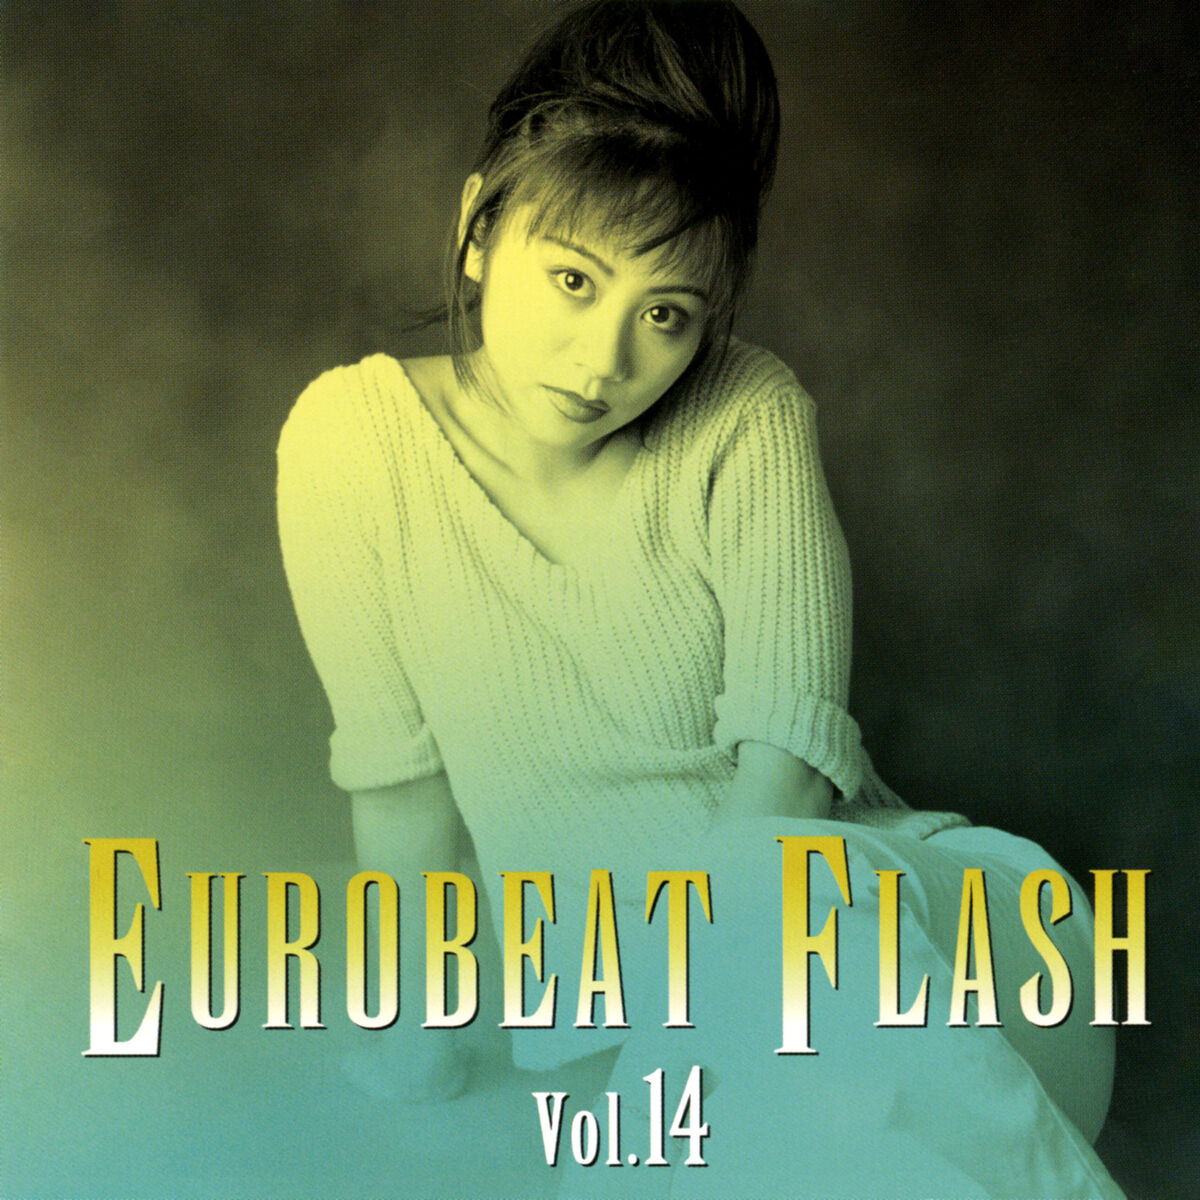 Eurobeat Flash Vol. 14 | Eurobeat Wiki | Fandom